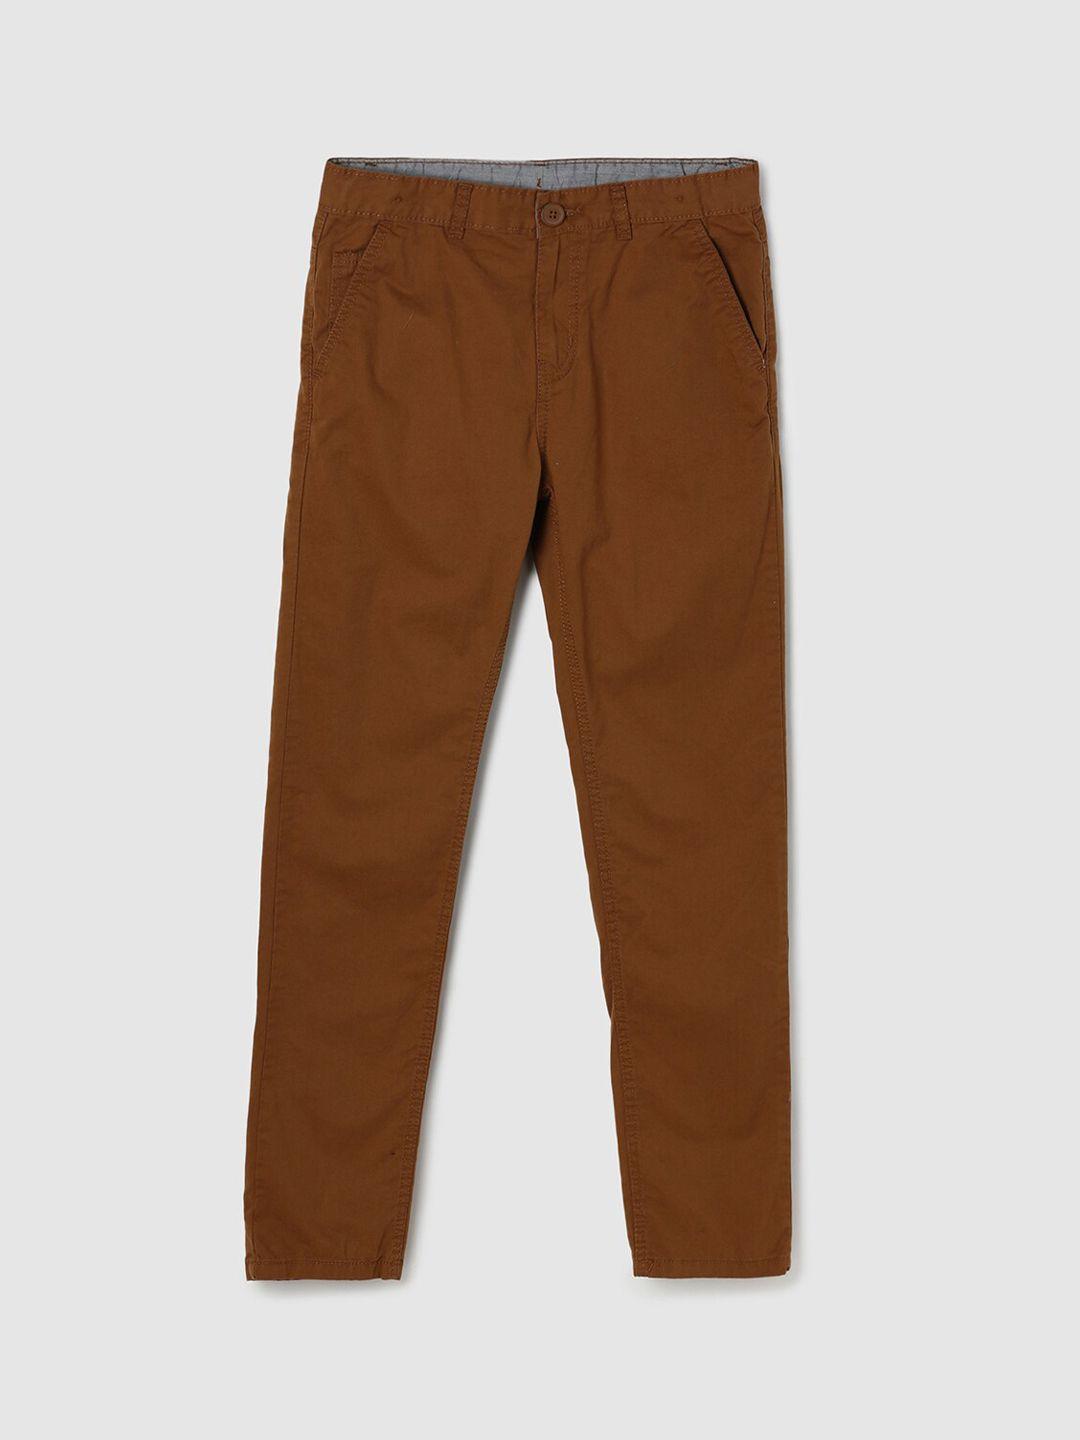 max boys khaki solid chinos regular fit cotton trouser